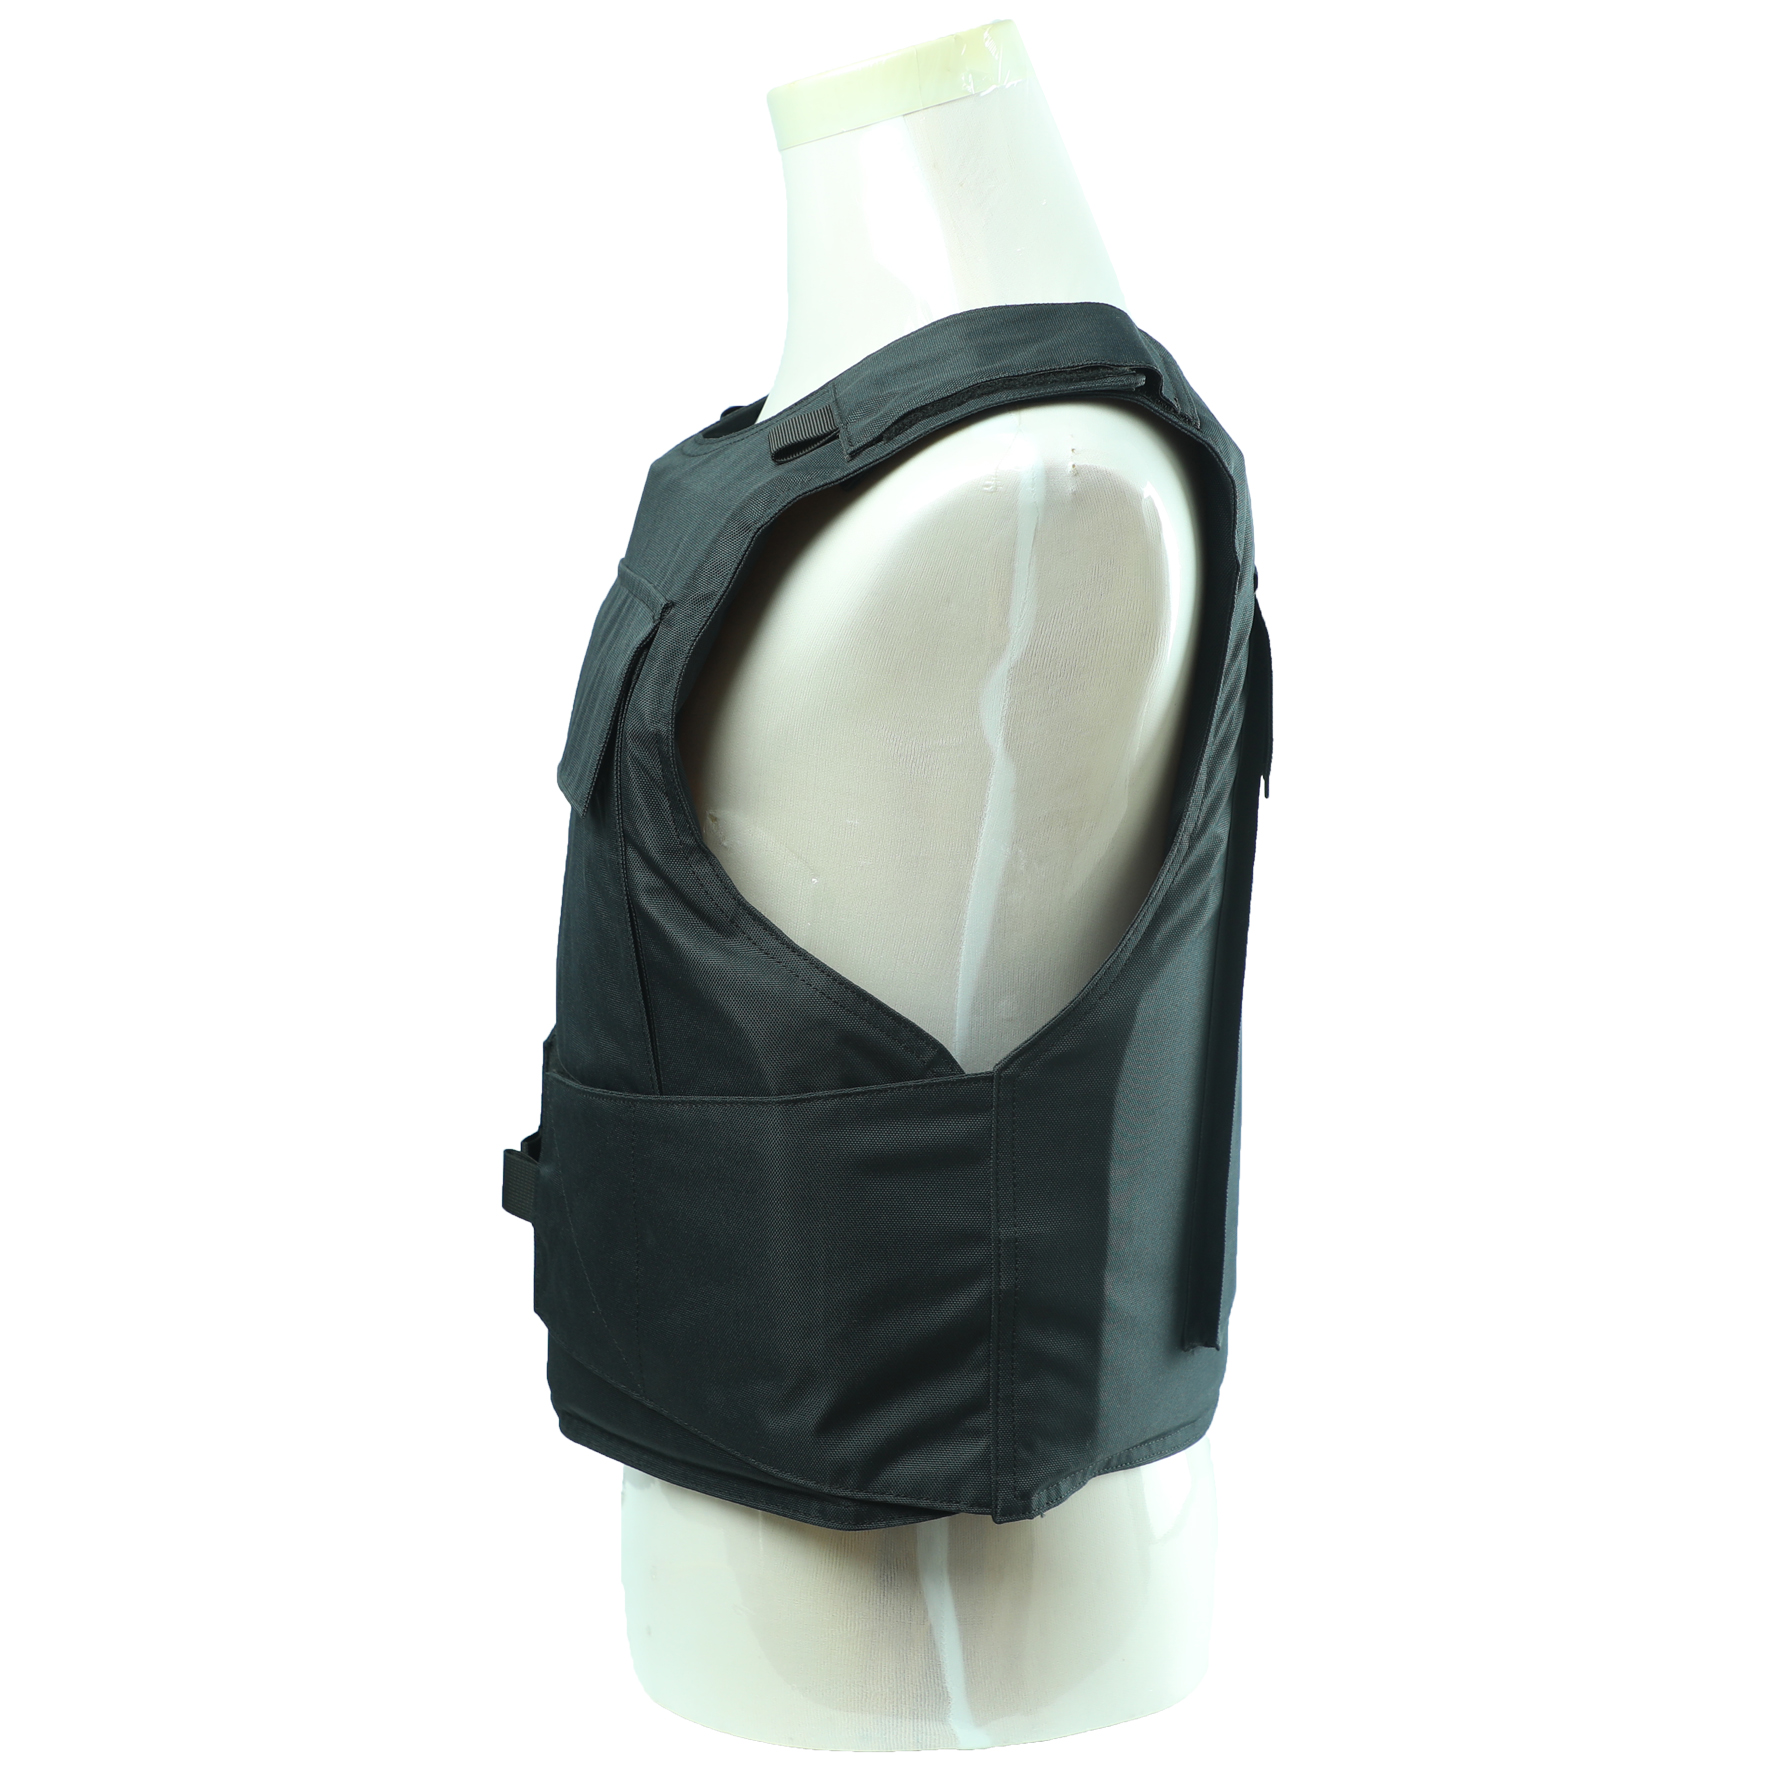 Custom Police Gear Armor Tactical Bulletproof Vest